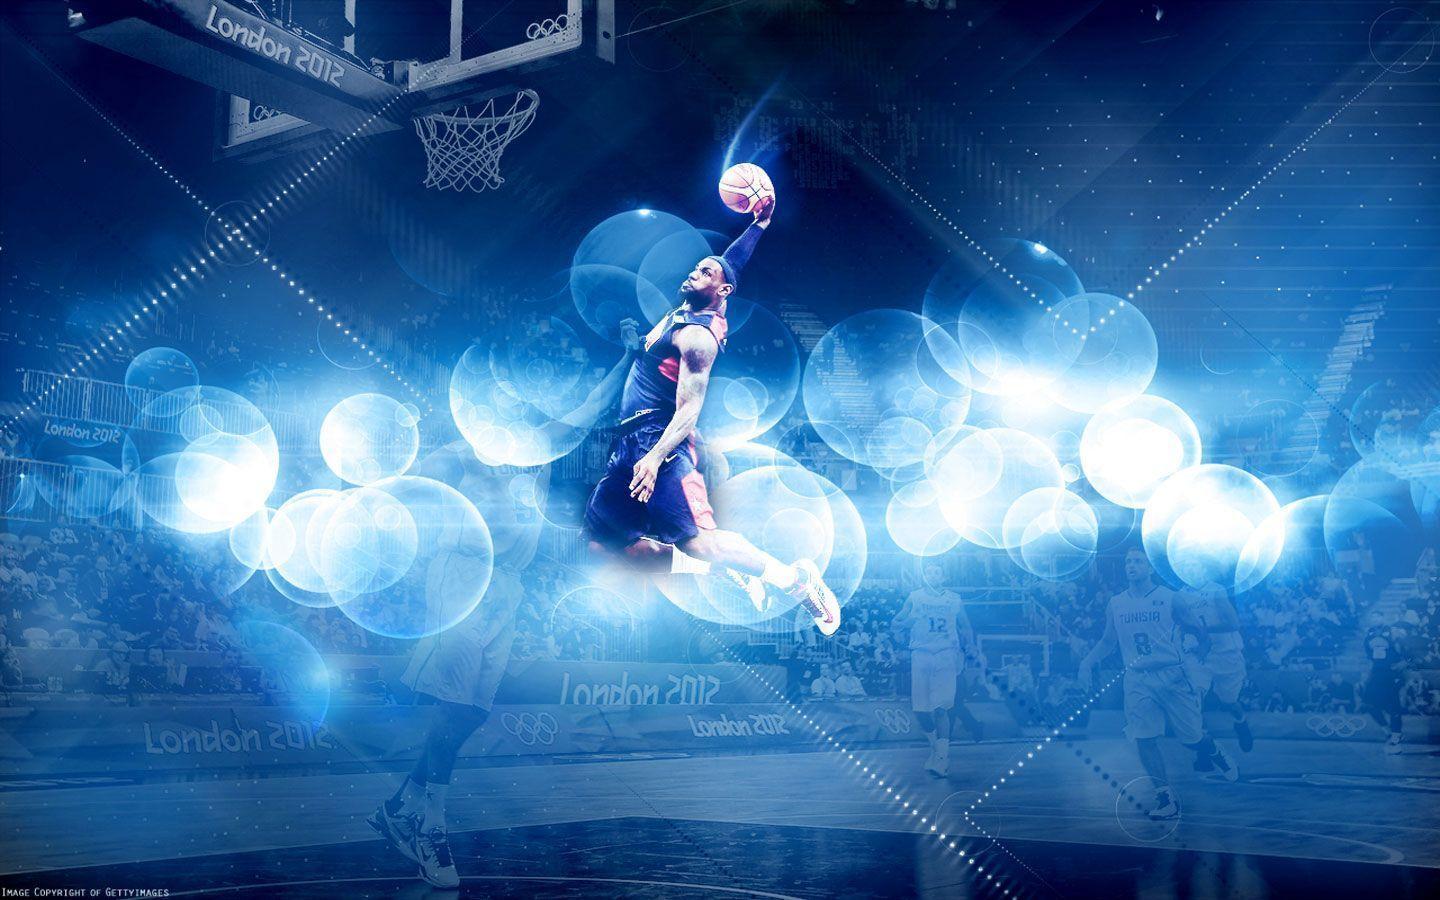 LeBron James 2012 Olympics Dunk vs Tunisia Wallpaper. Basketball